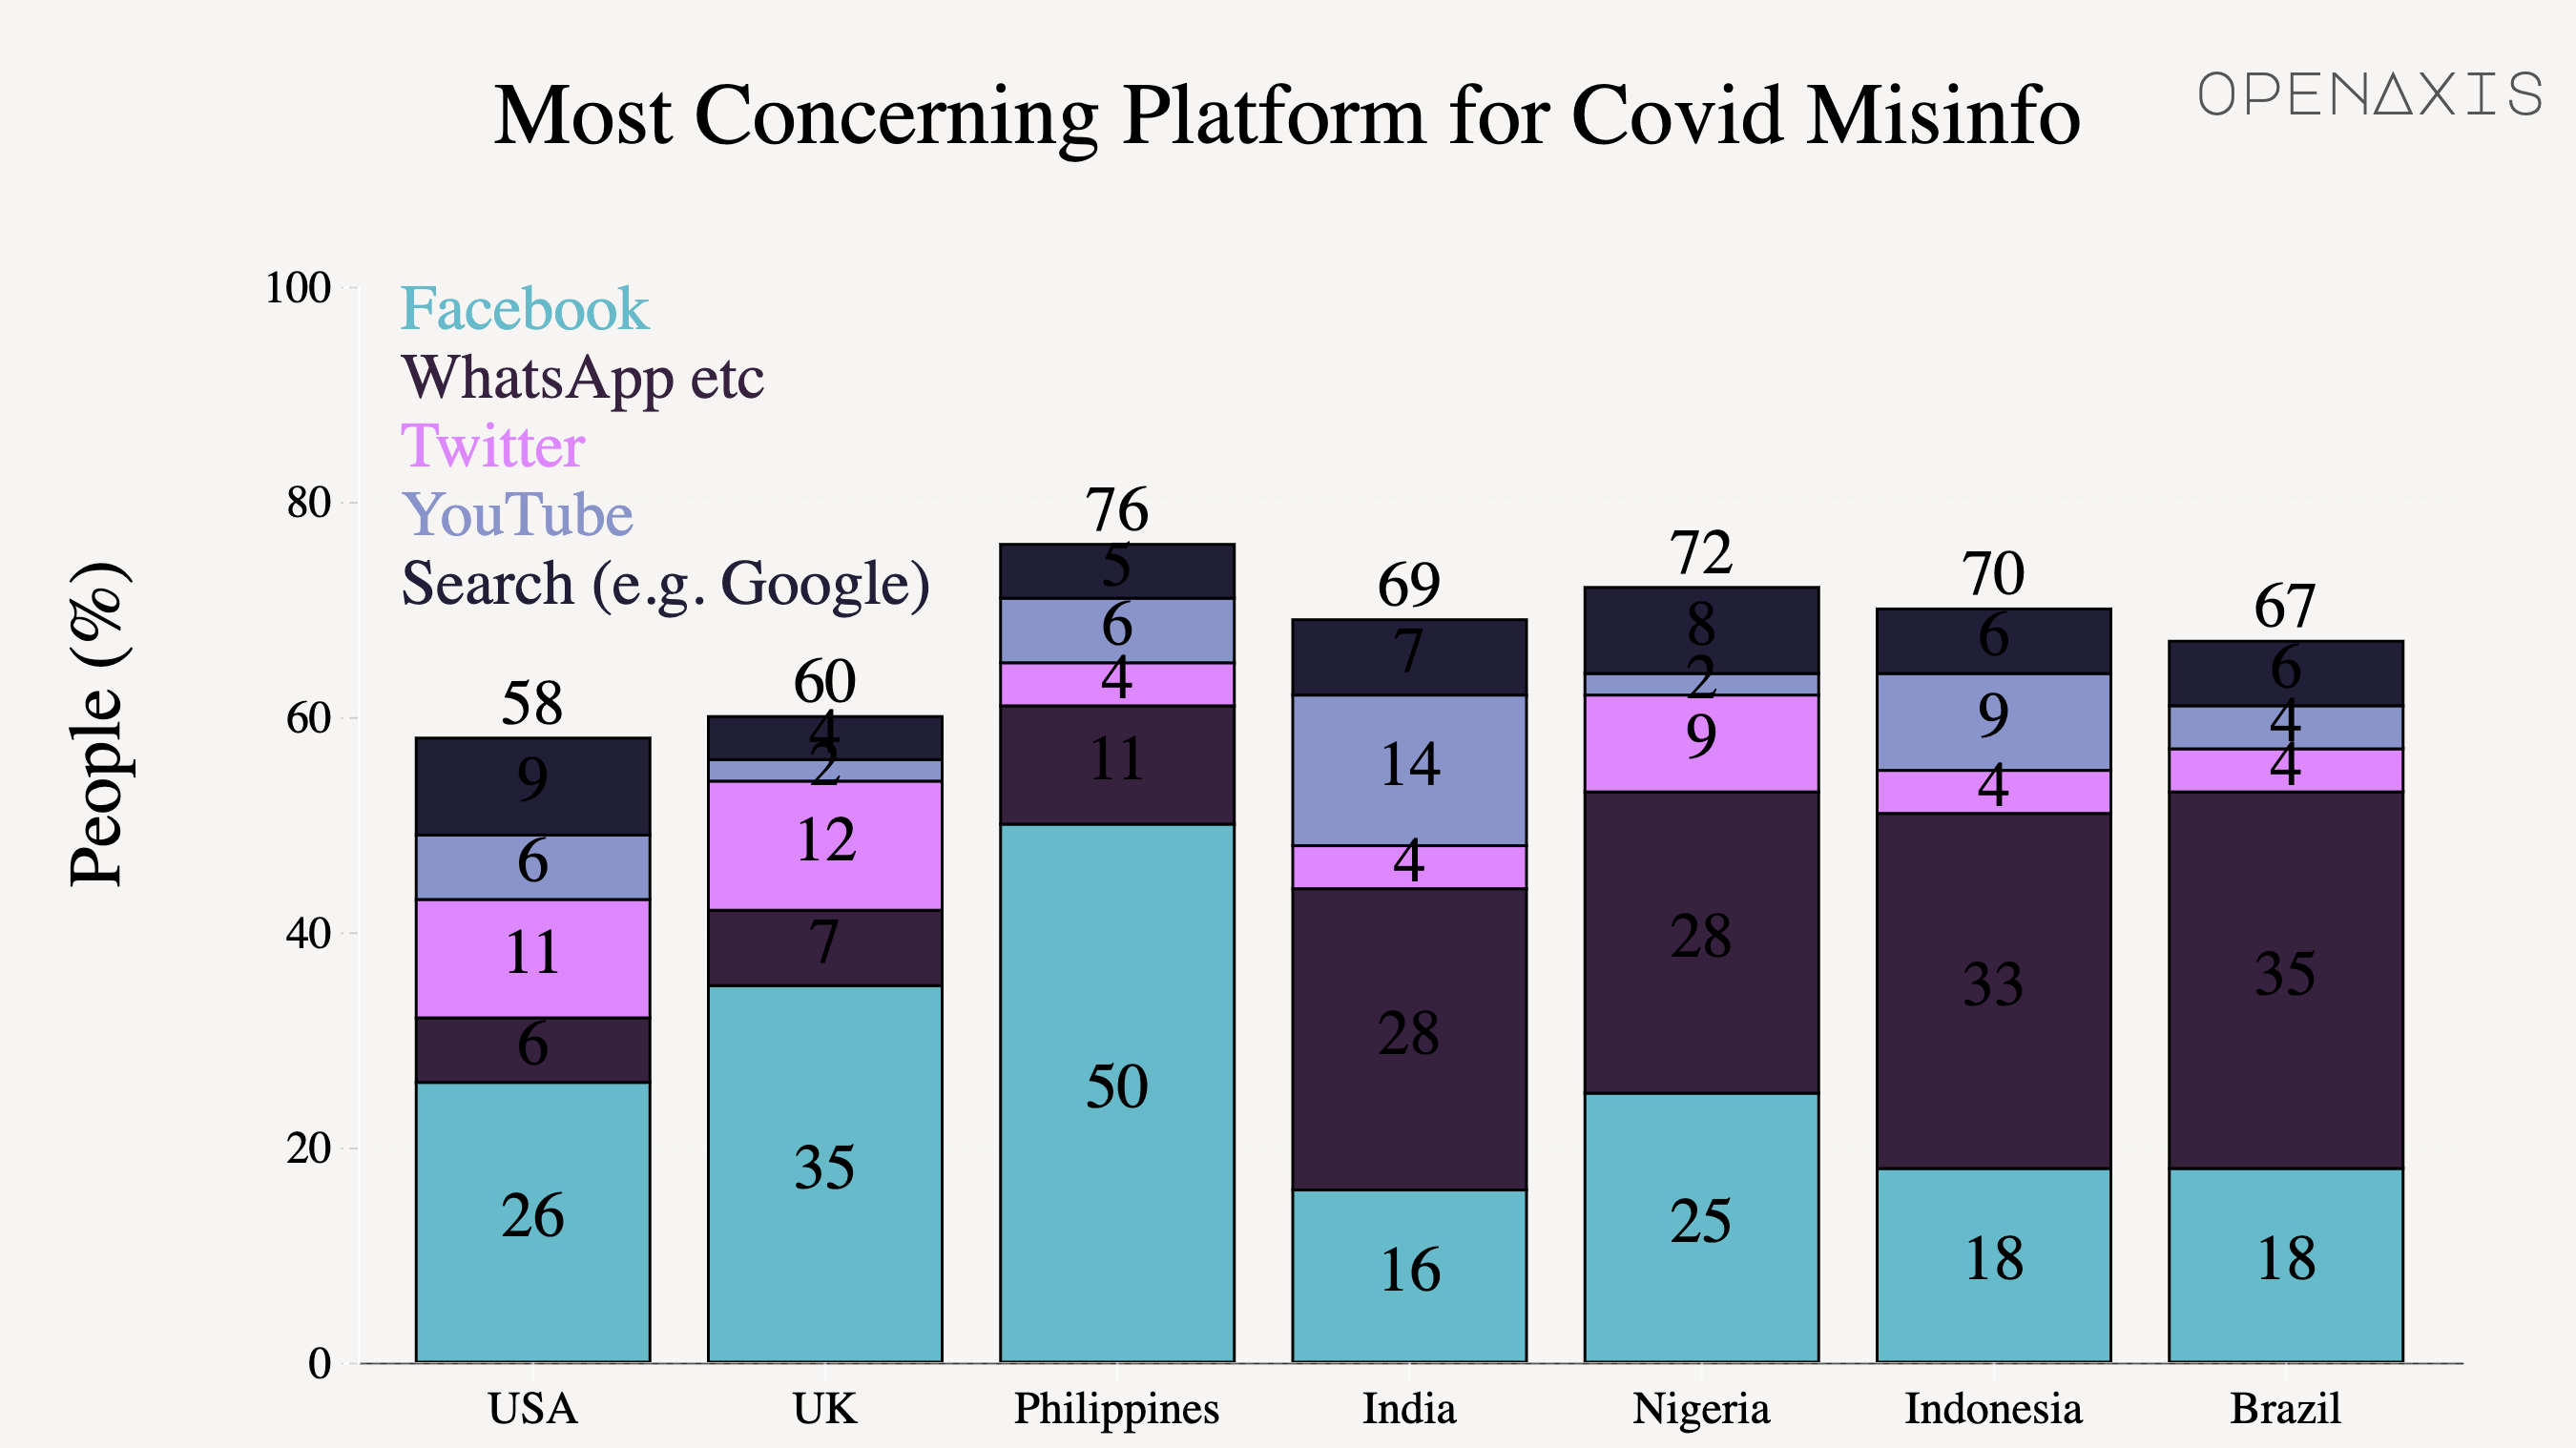 "Most Concerning Platform for Covid Misinfo "